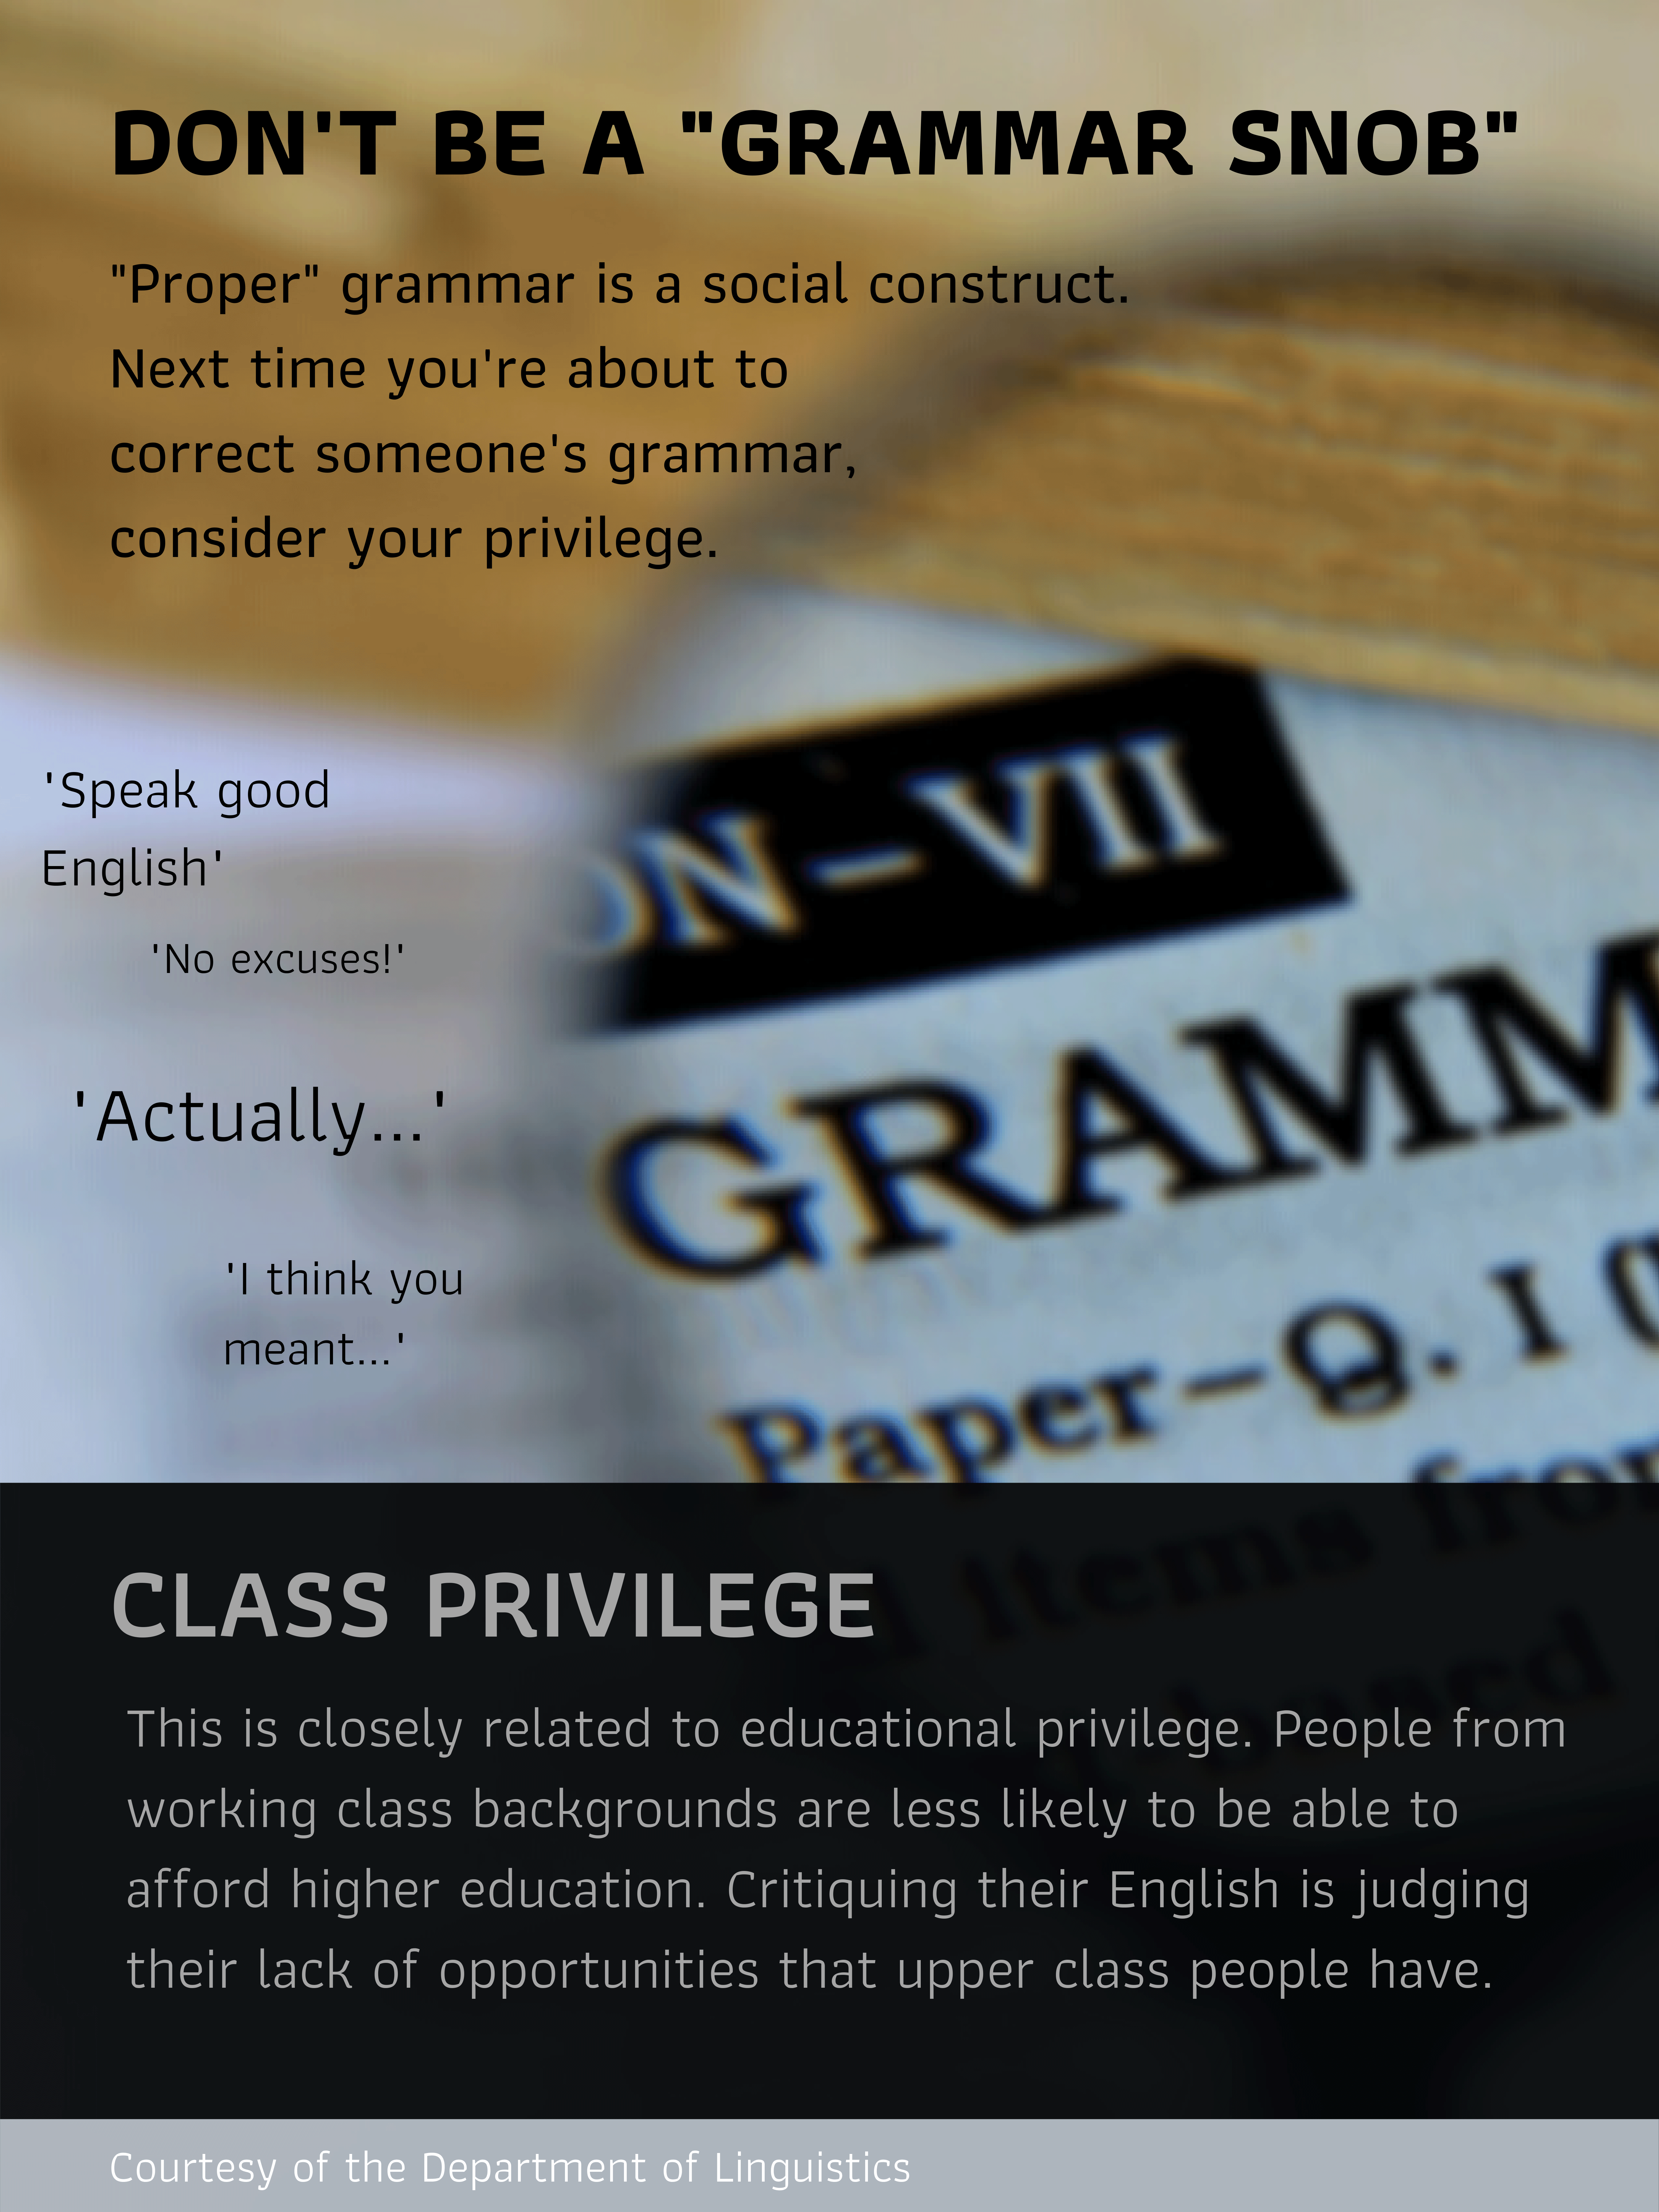 Linguistics Poster. Don't be a "grammar snob". See webpage for full description.